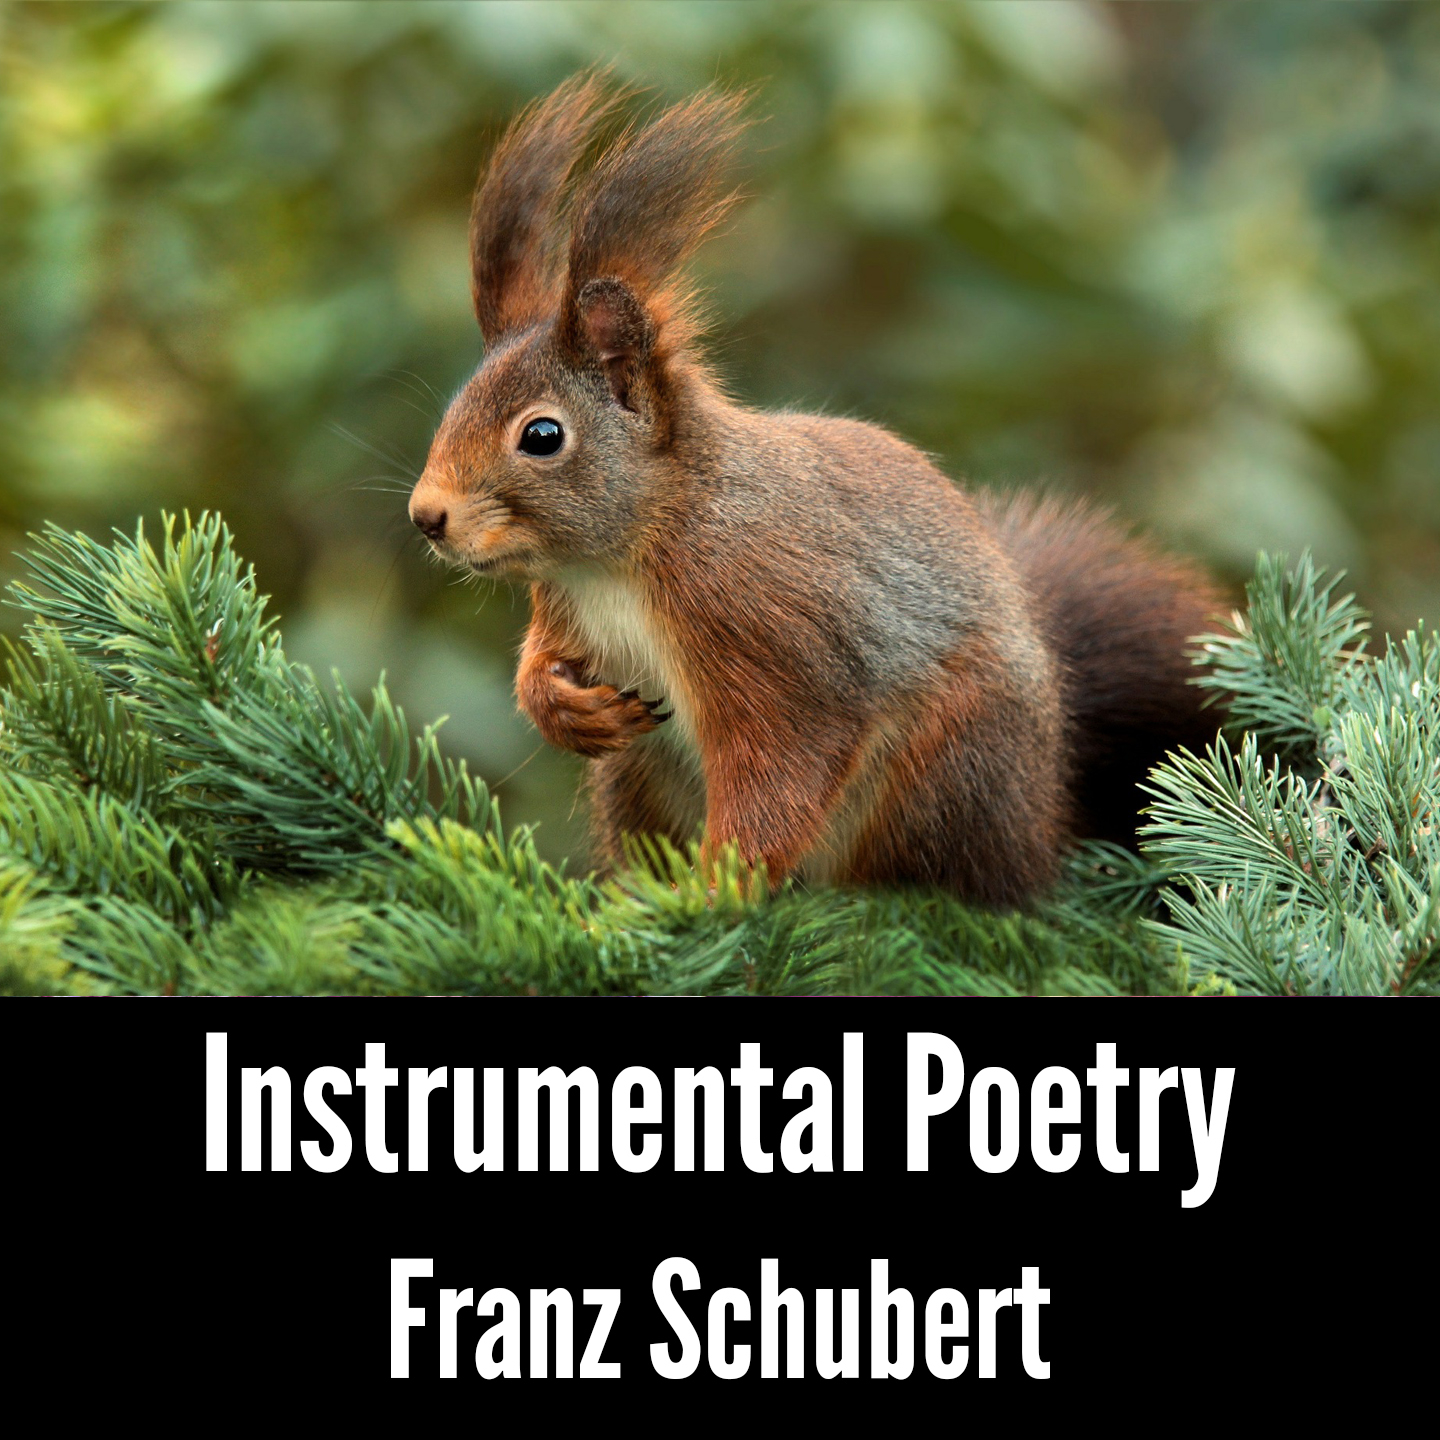 Instrumental Poetry: Franz Schubert